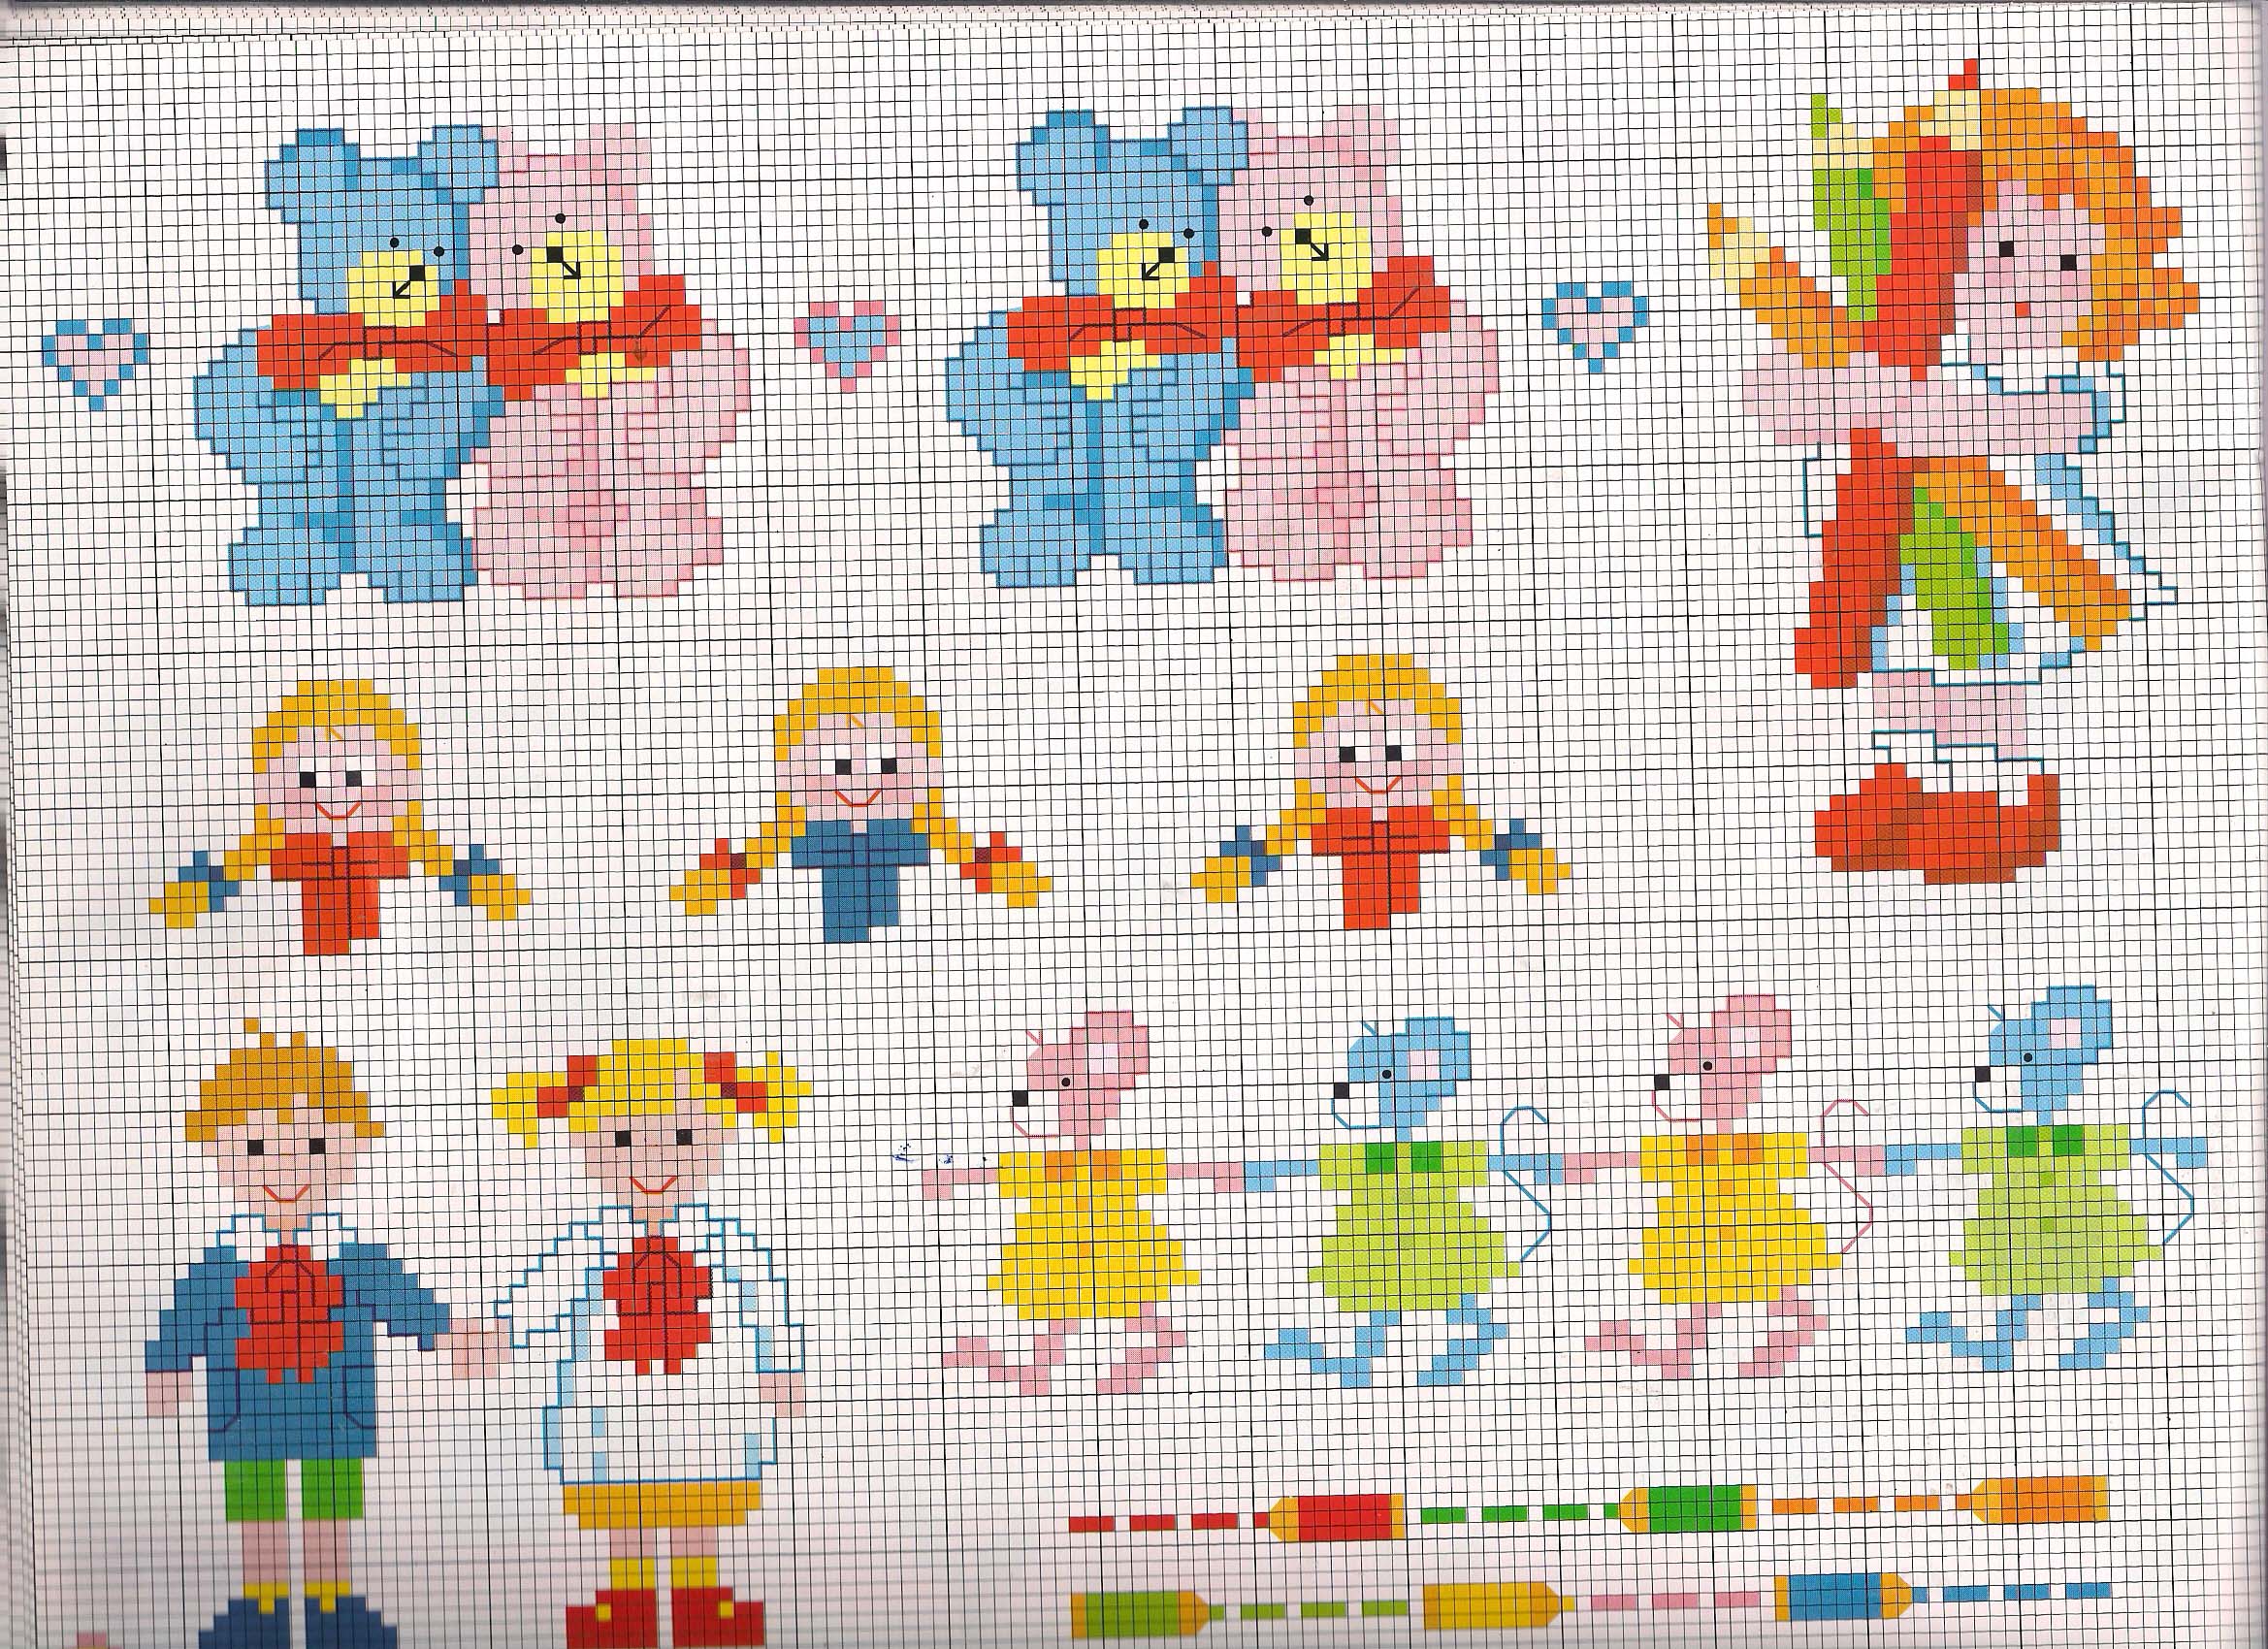 Teddy bears and bunnies cross stitch patterns baby blanket idea